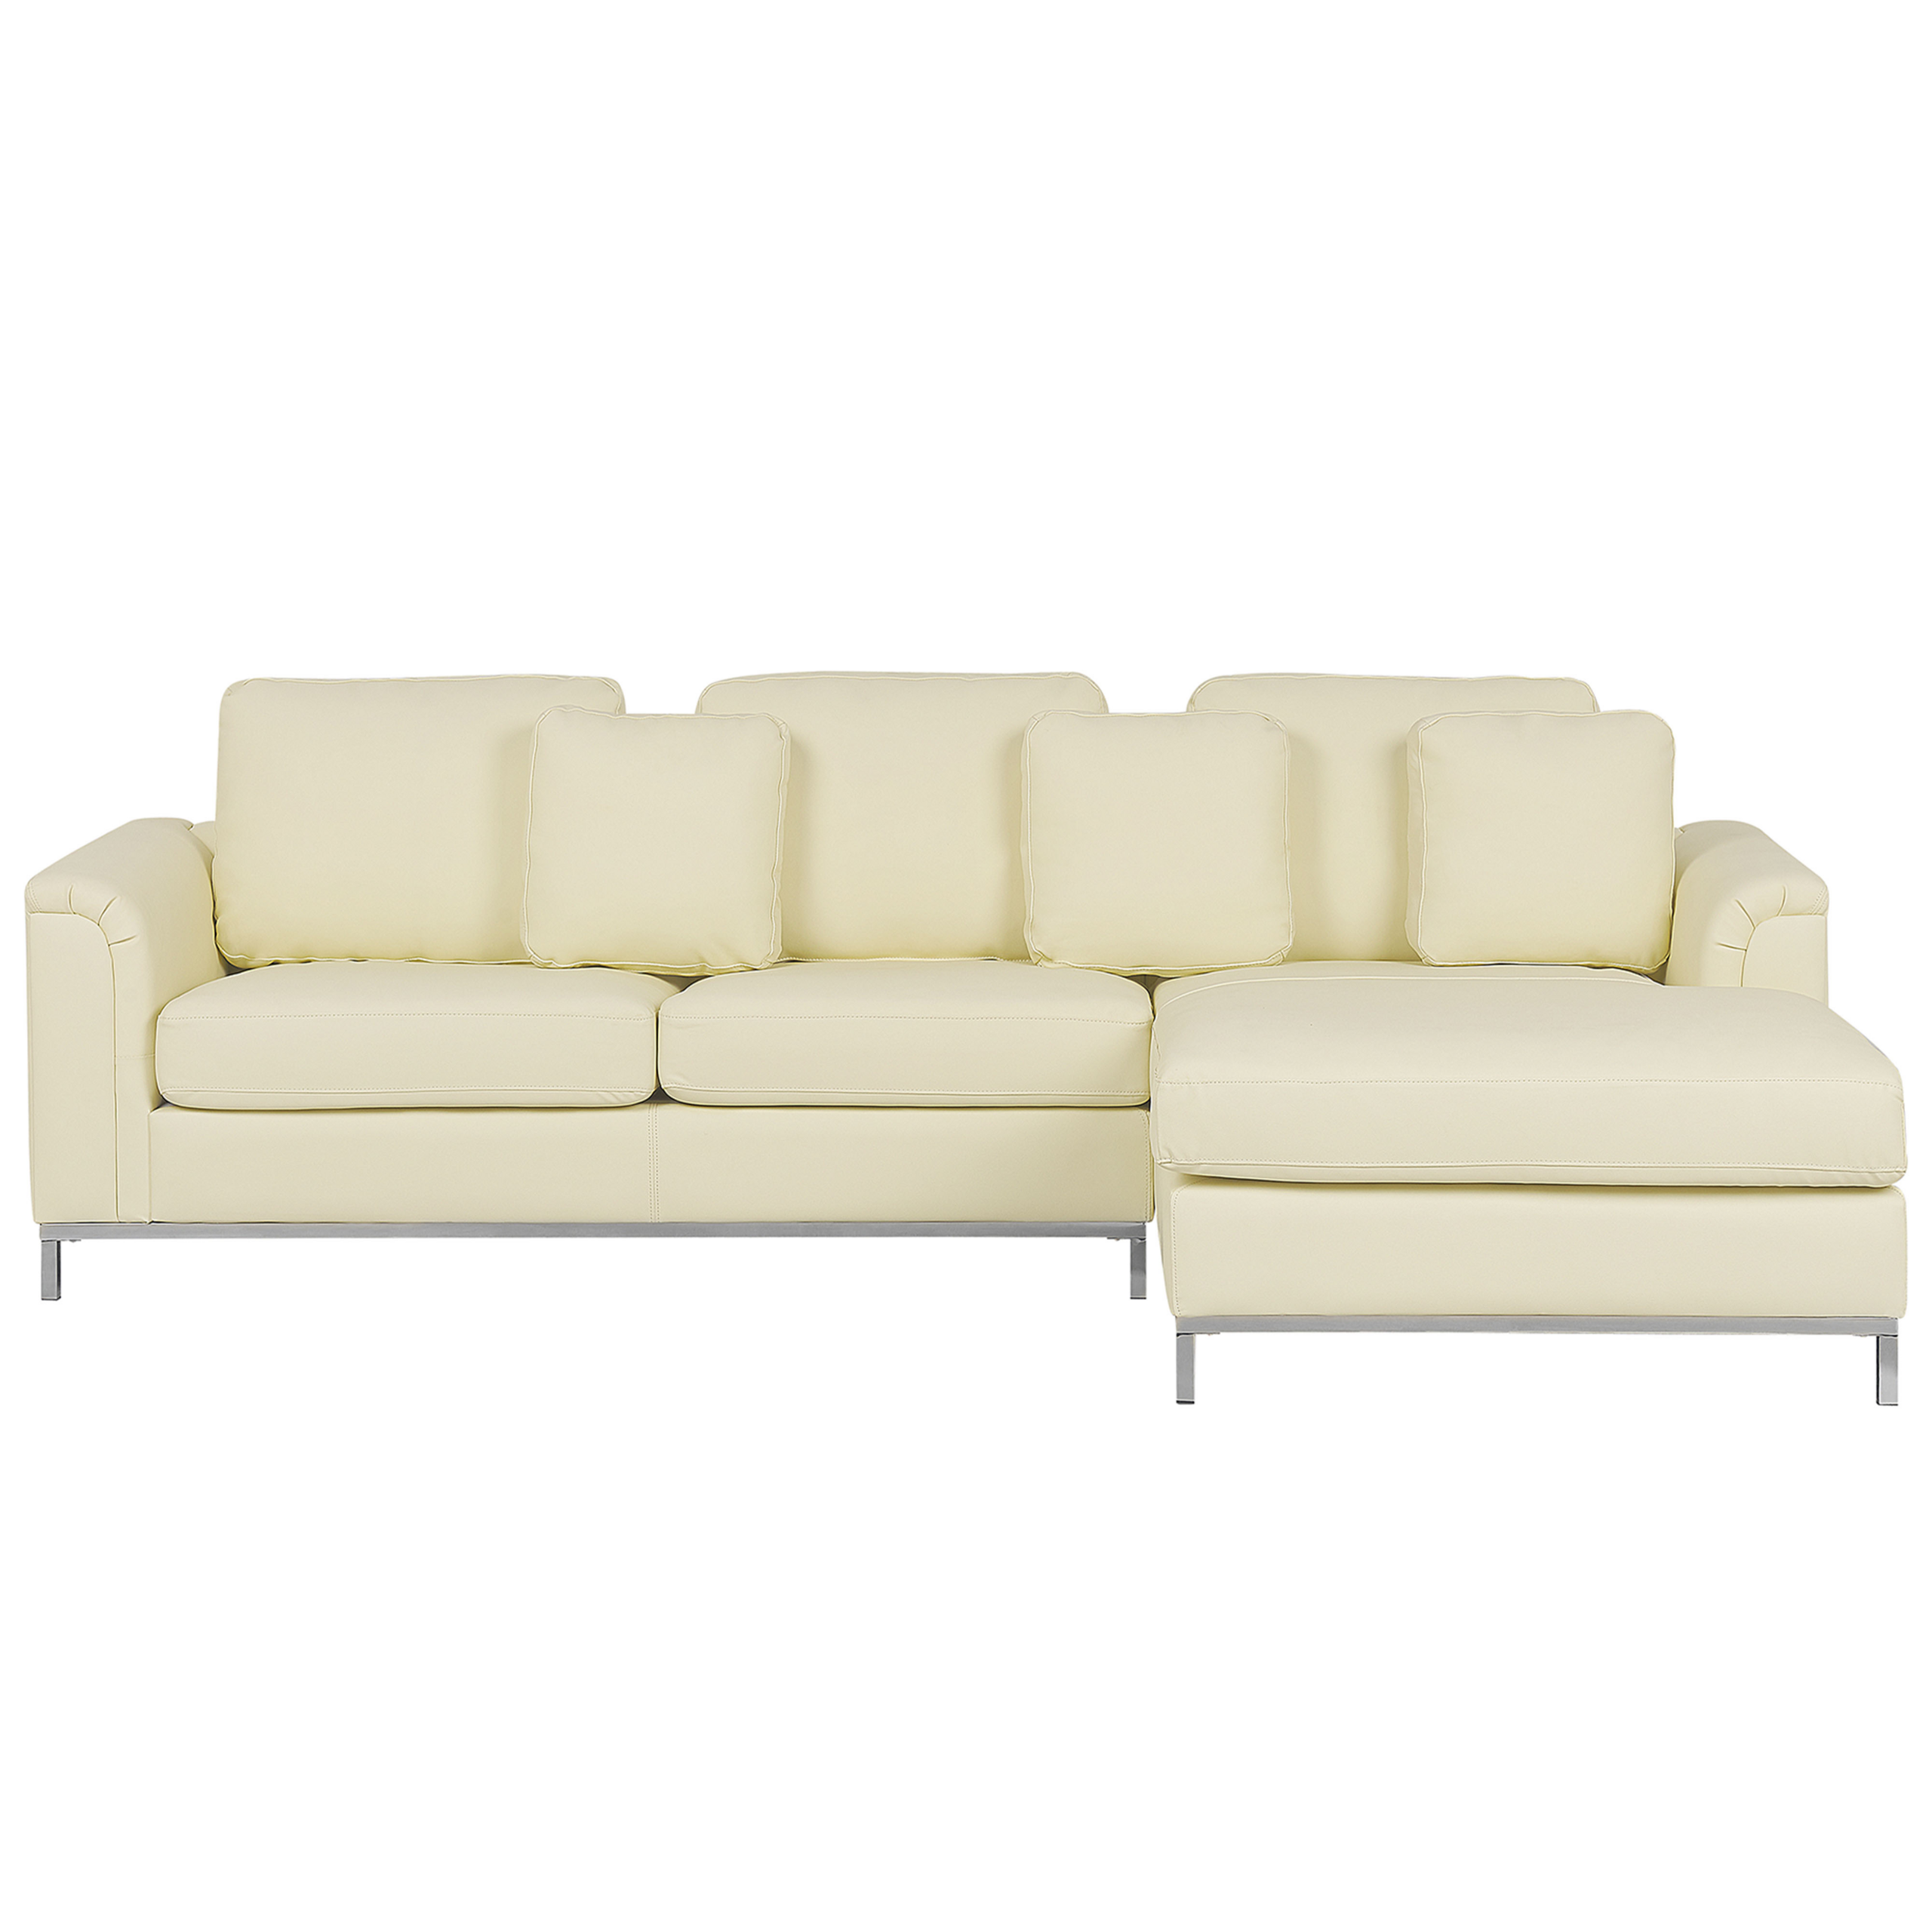 Beliani Corner Sofa Beige Leather Upholstered L-shaped Left Hand Orientation